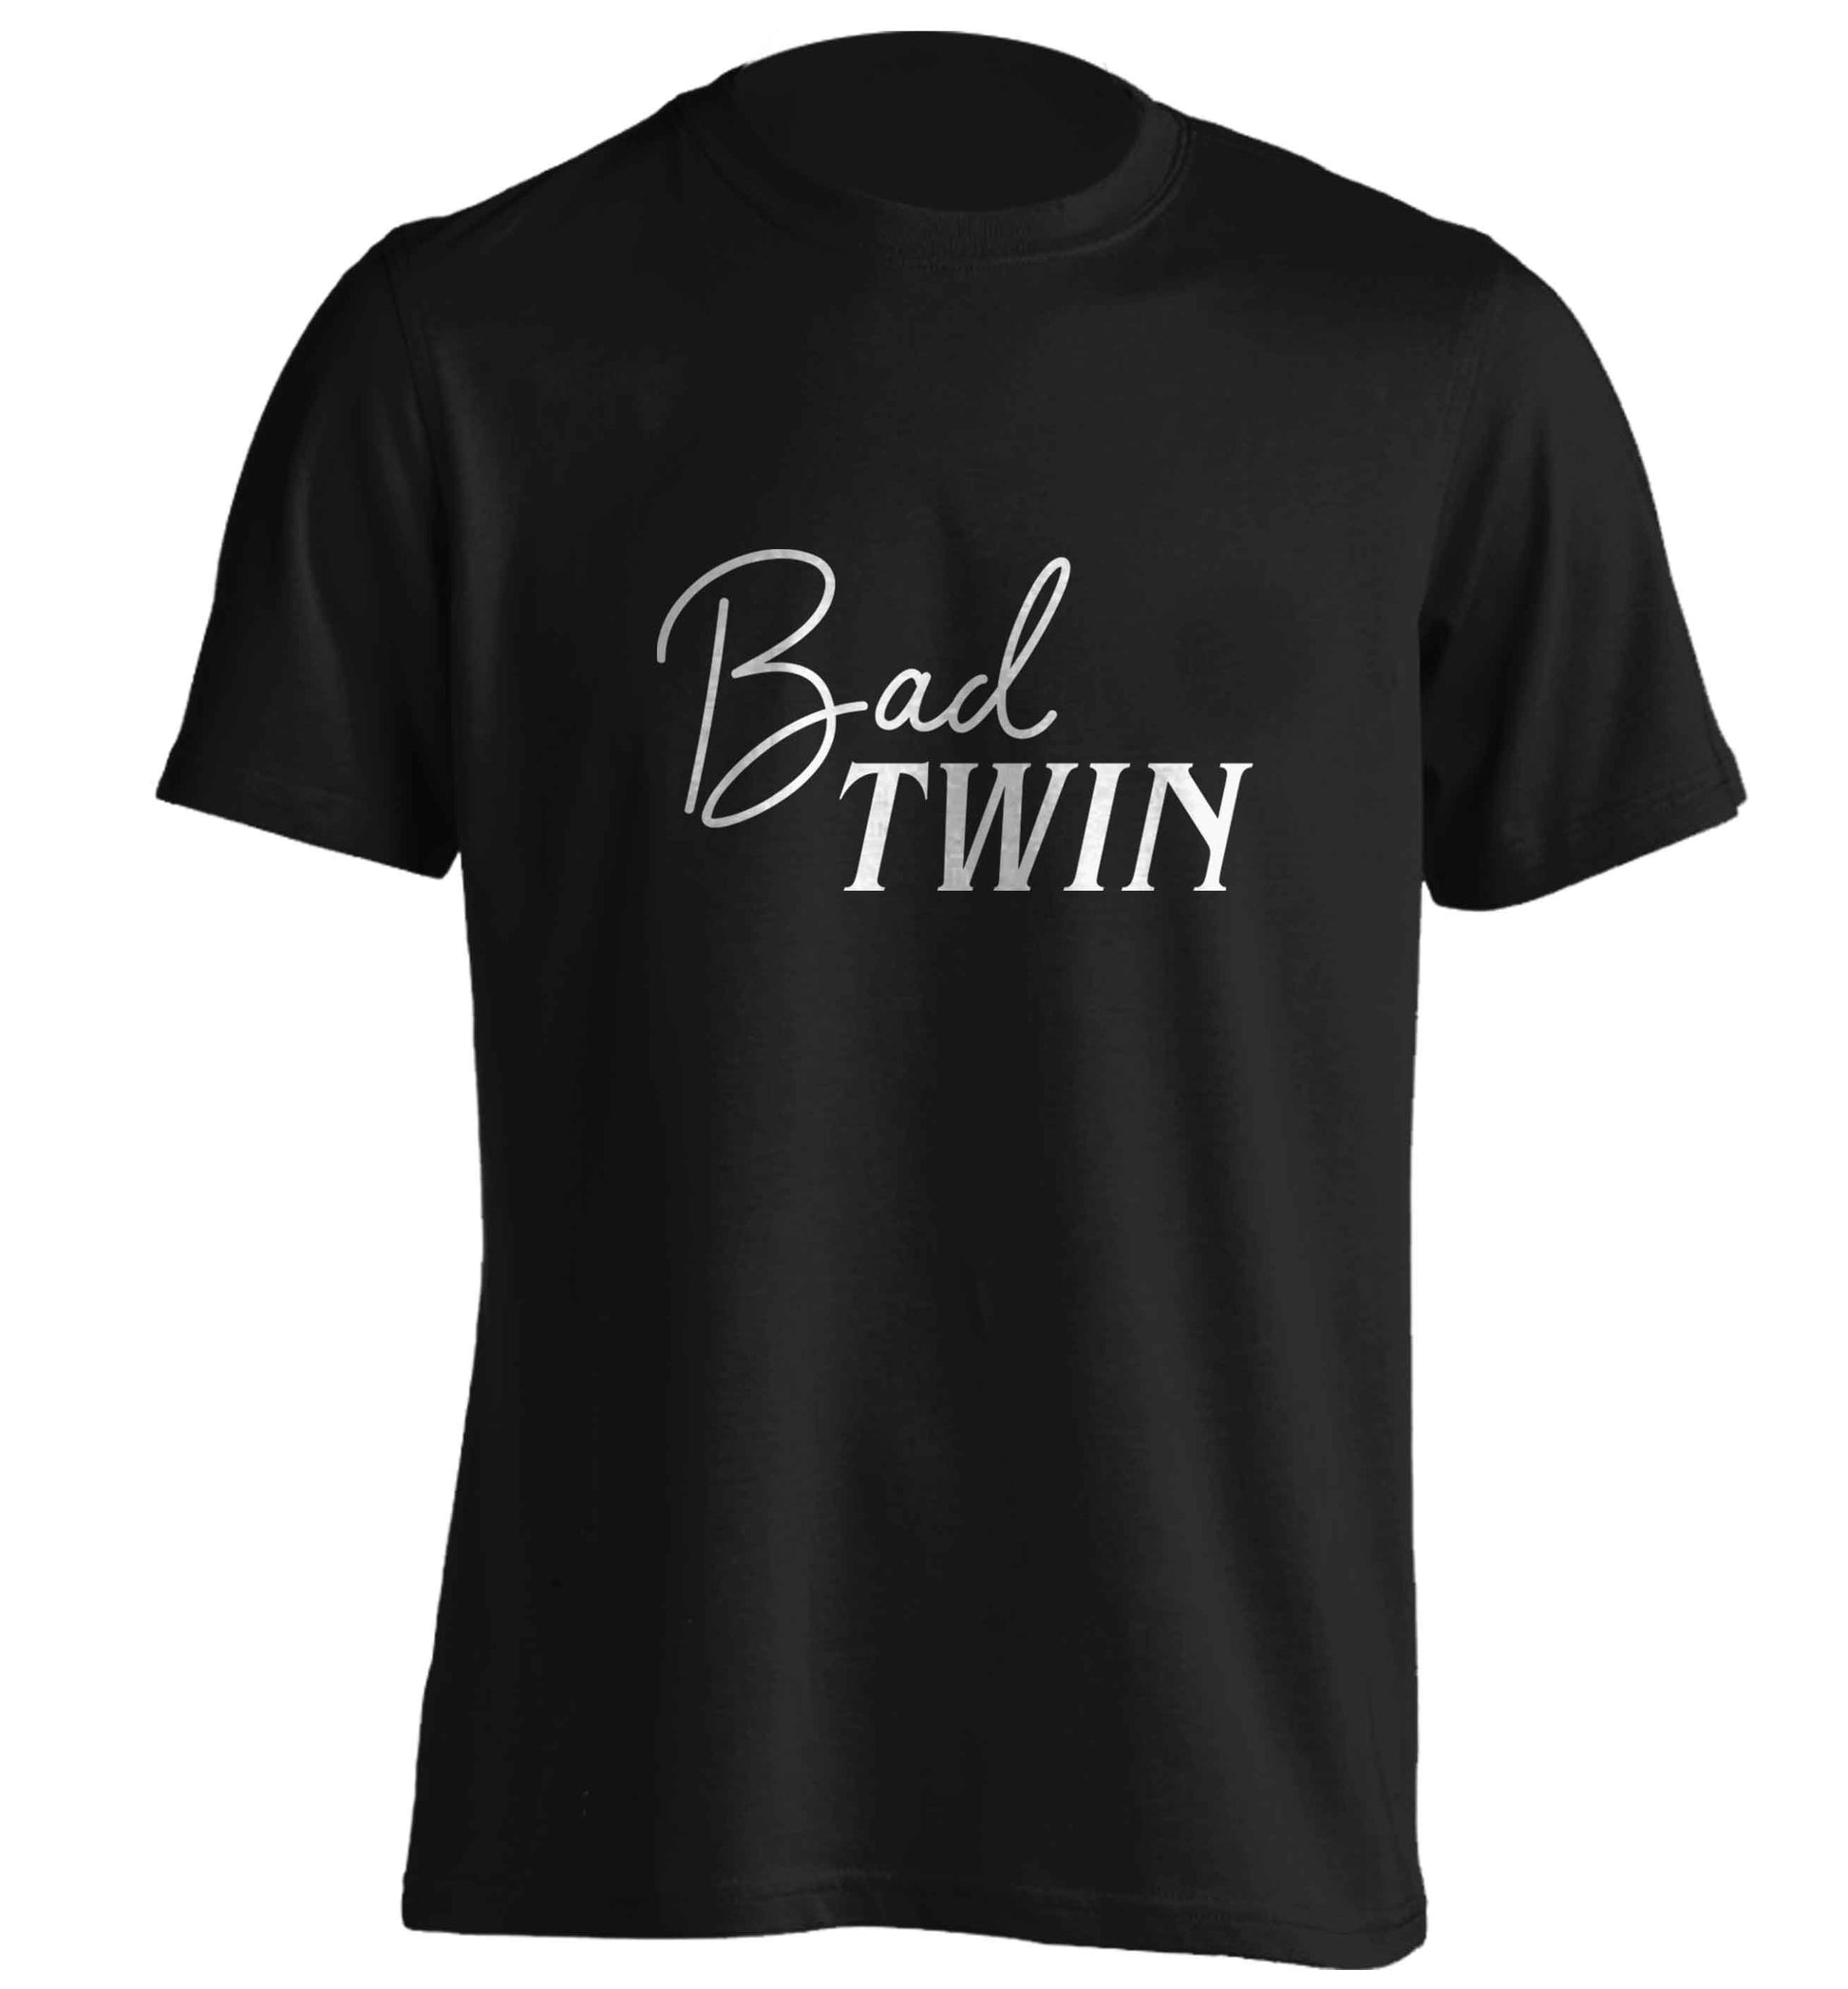 Bad twin adults unisex black Tshirt 2XL